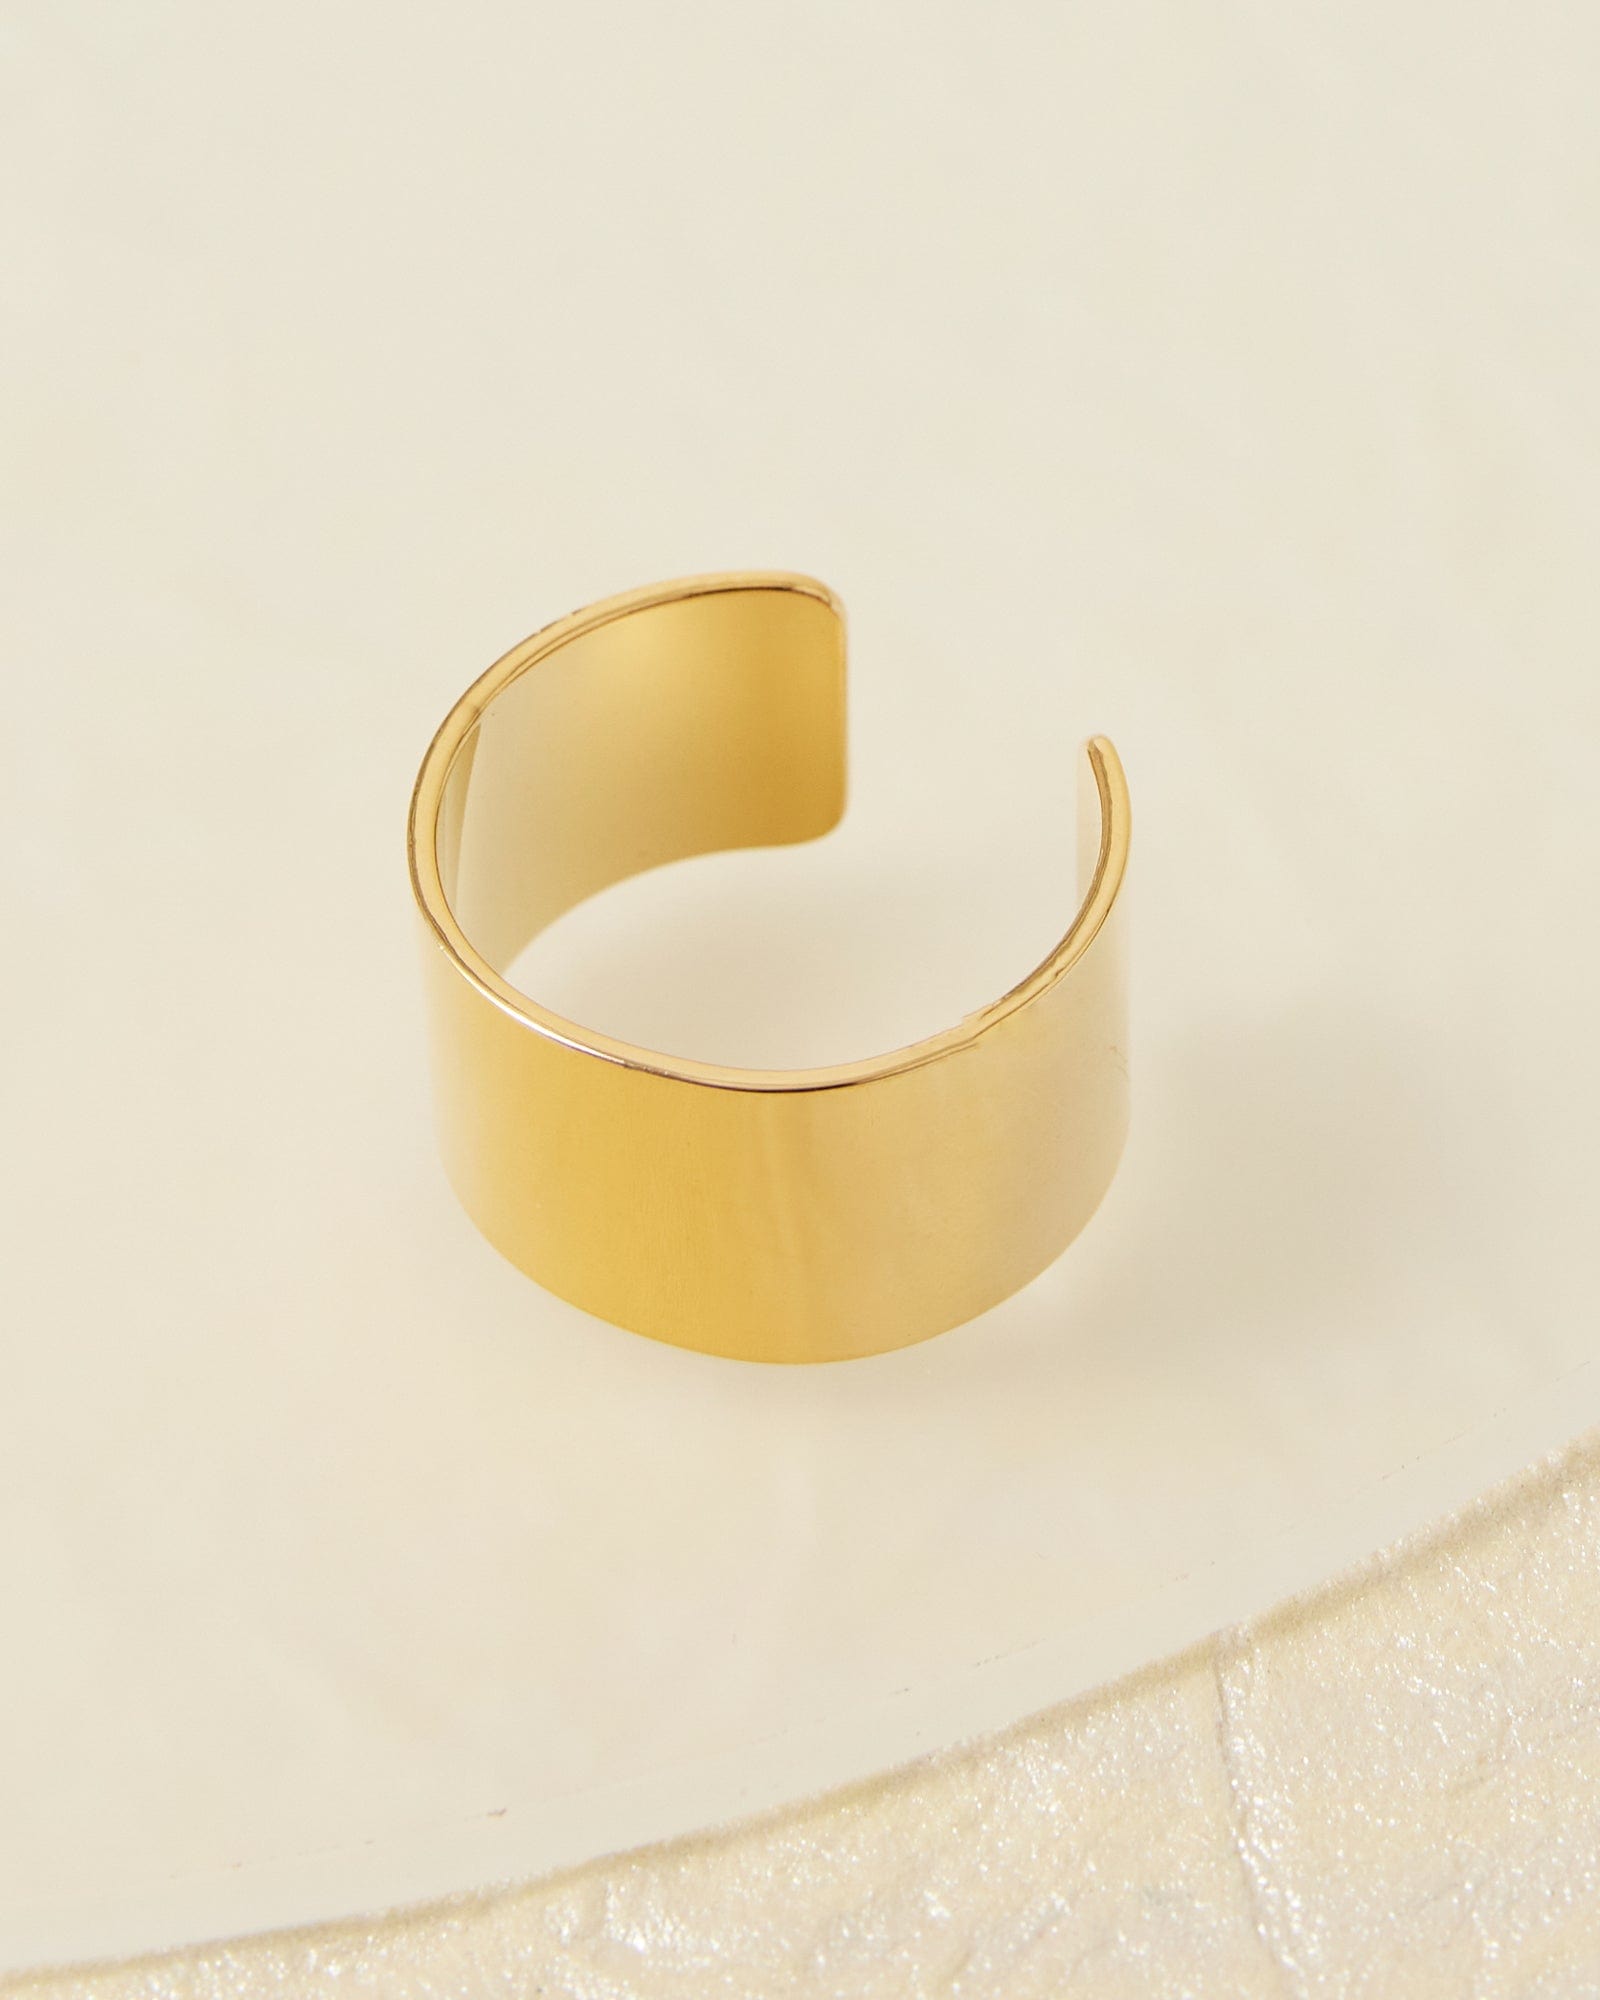 Thick gold ring resembling a cigar band.